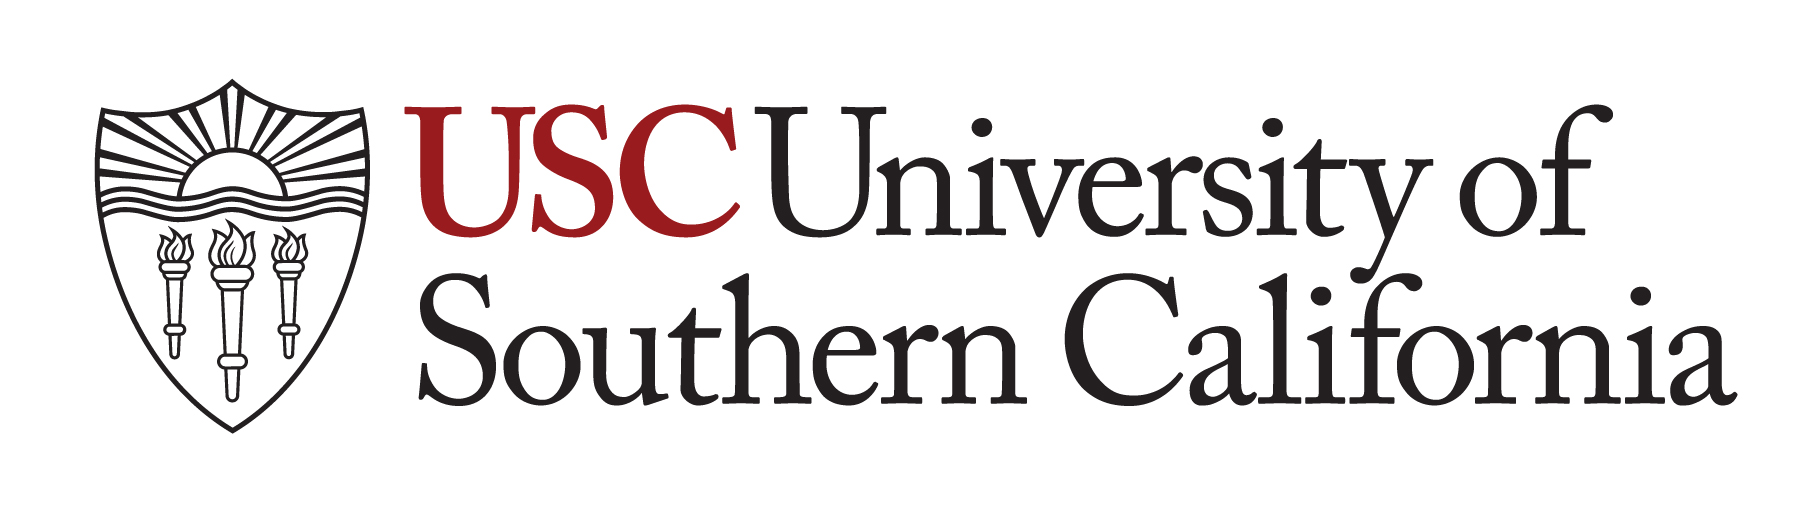 USC - University of Southern California